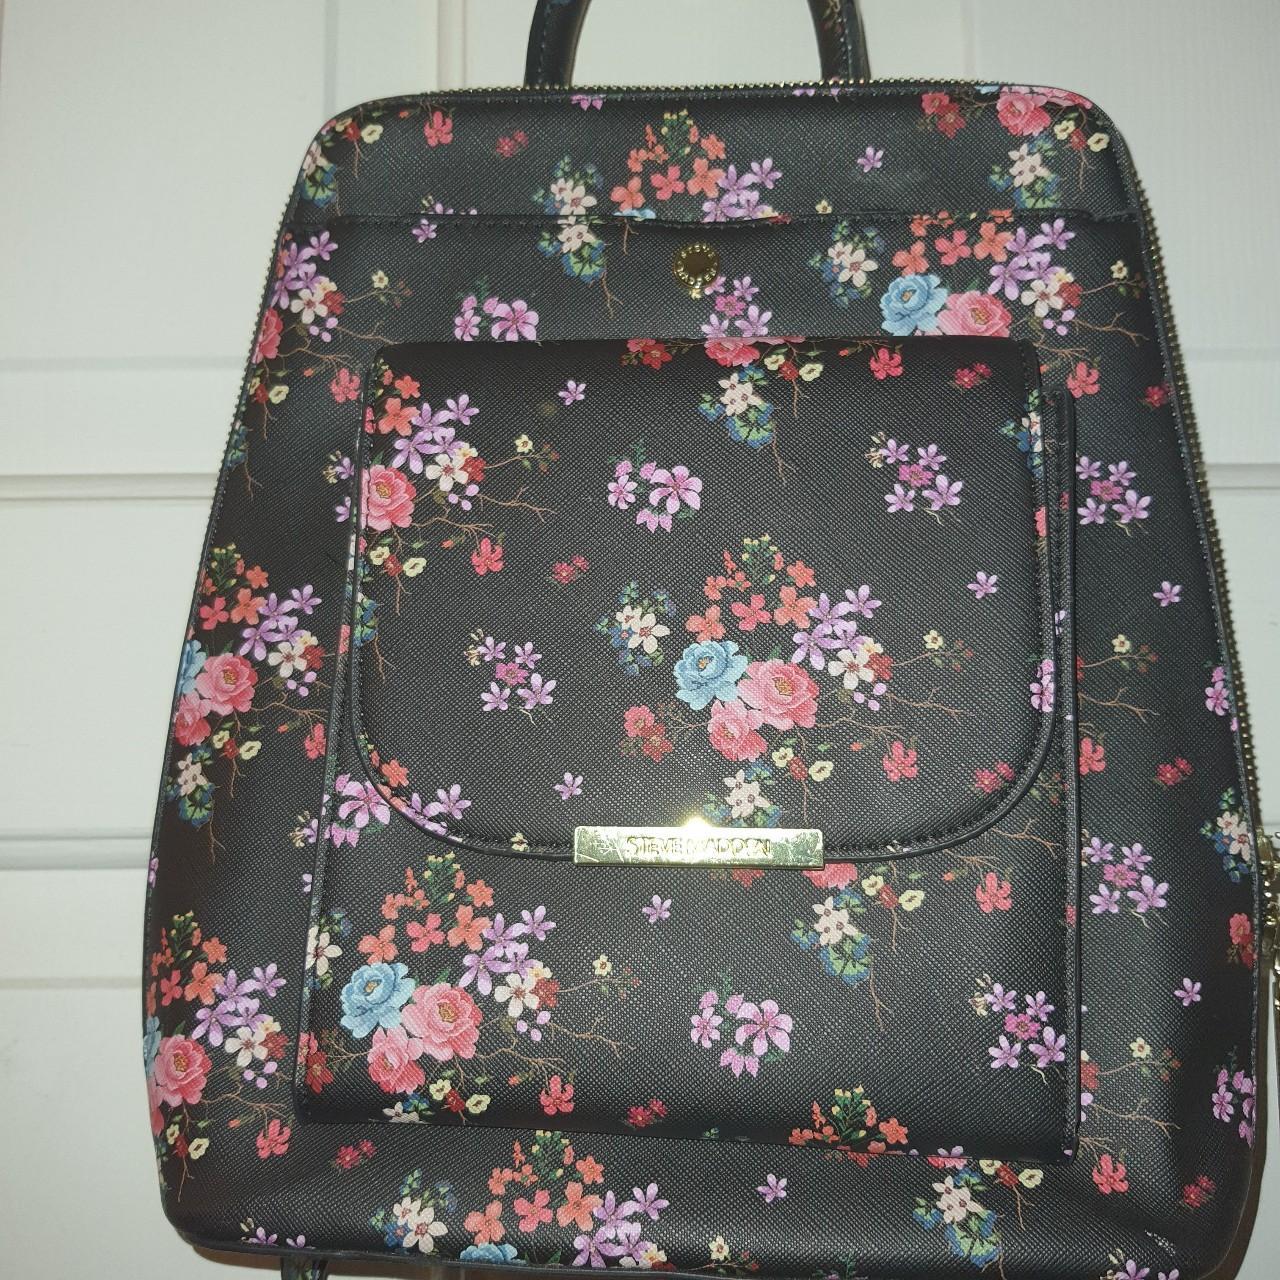 pink steve madden duffle bag/travel Bag Great Condition Weekend Bag